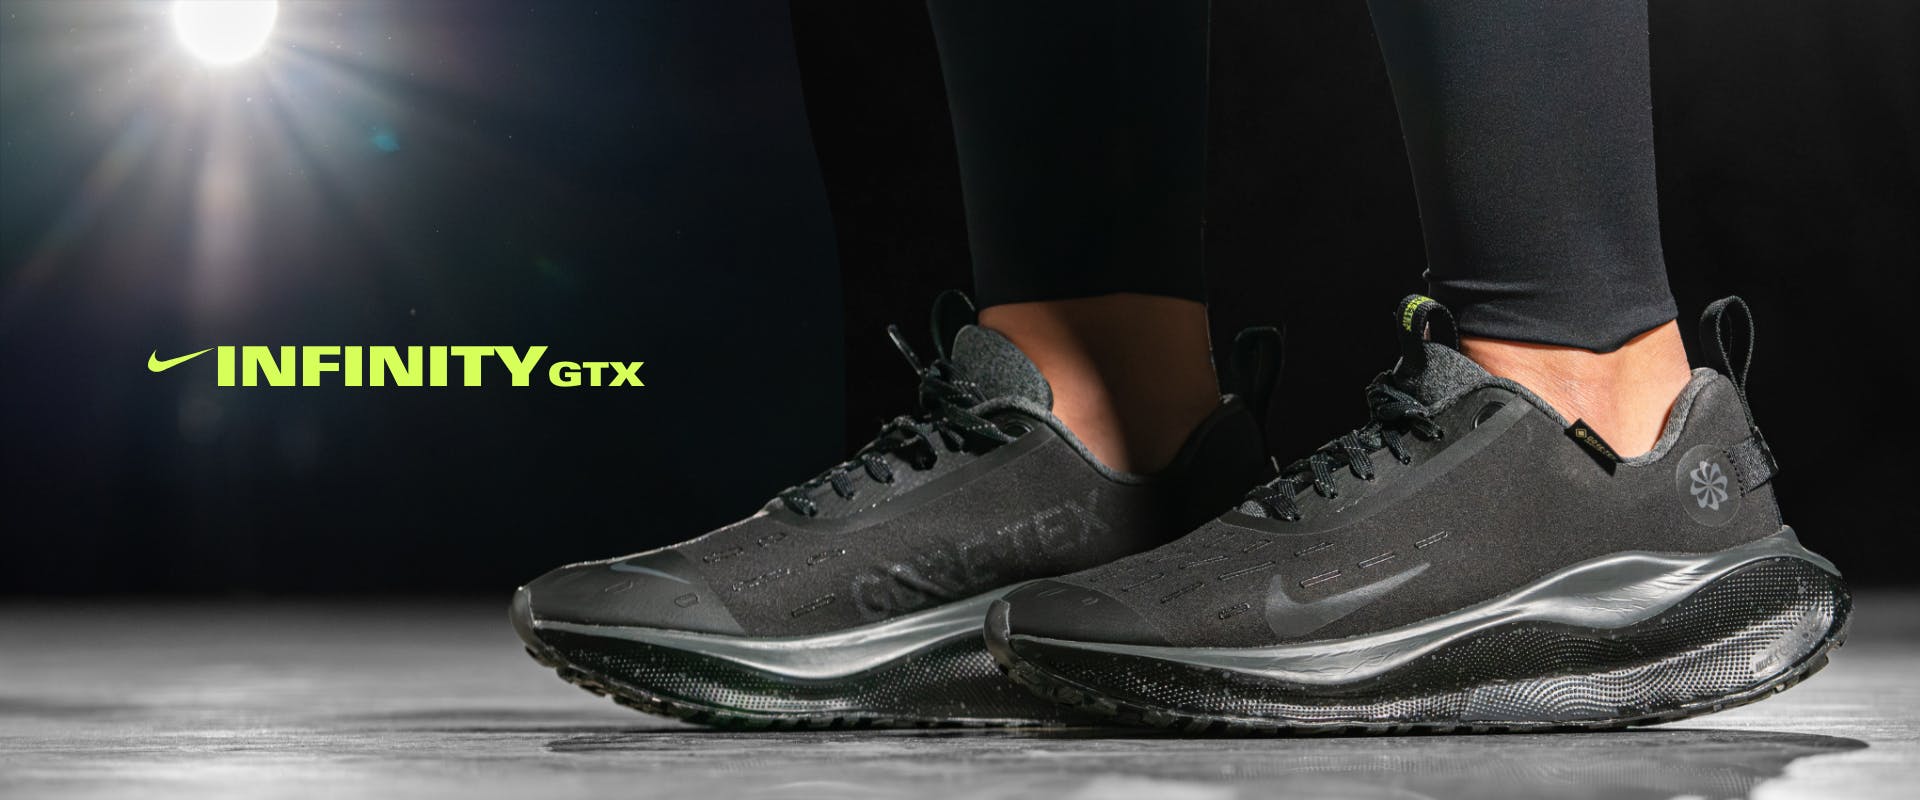 Nike Power Speed Flash Men's Running Tights (X-Large, Black) : :  Shoes & Handbags